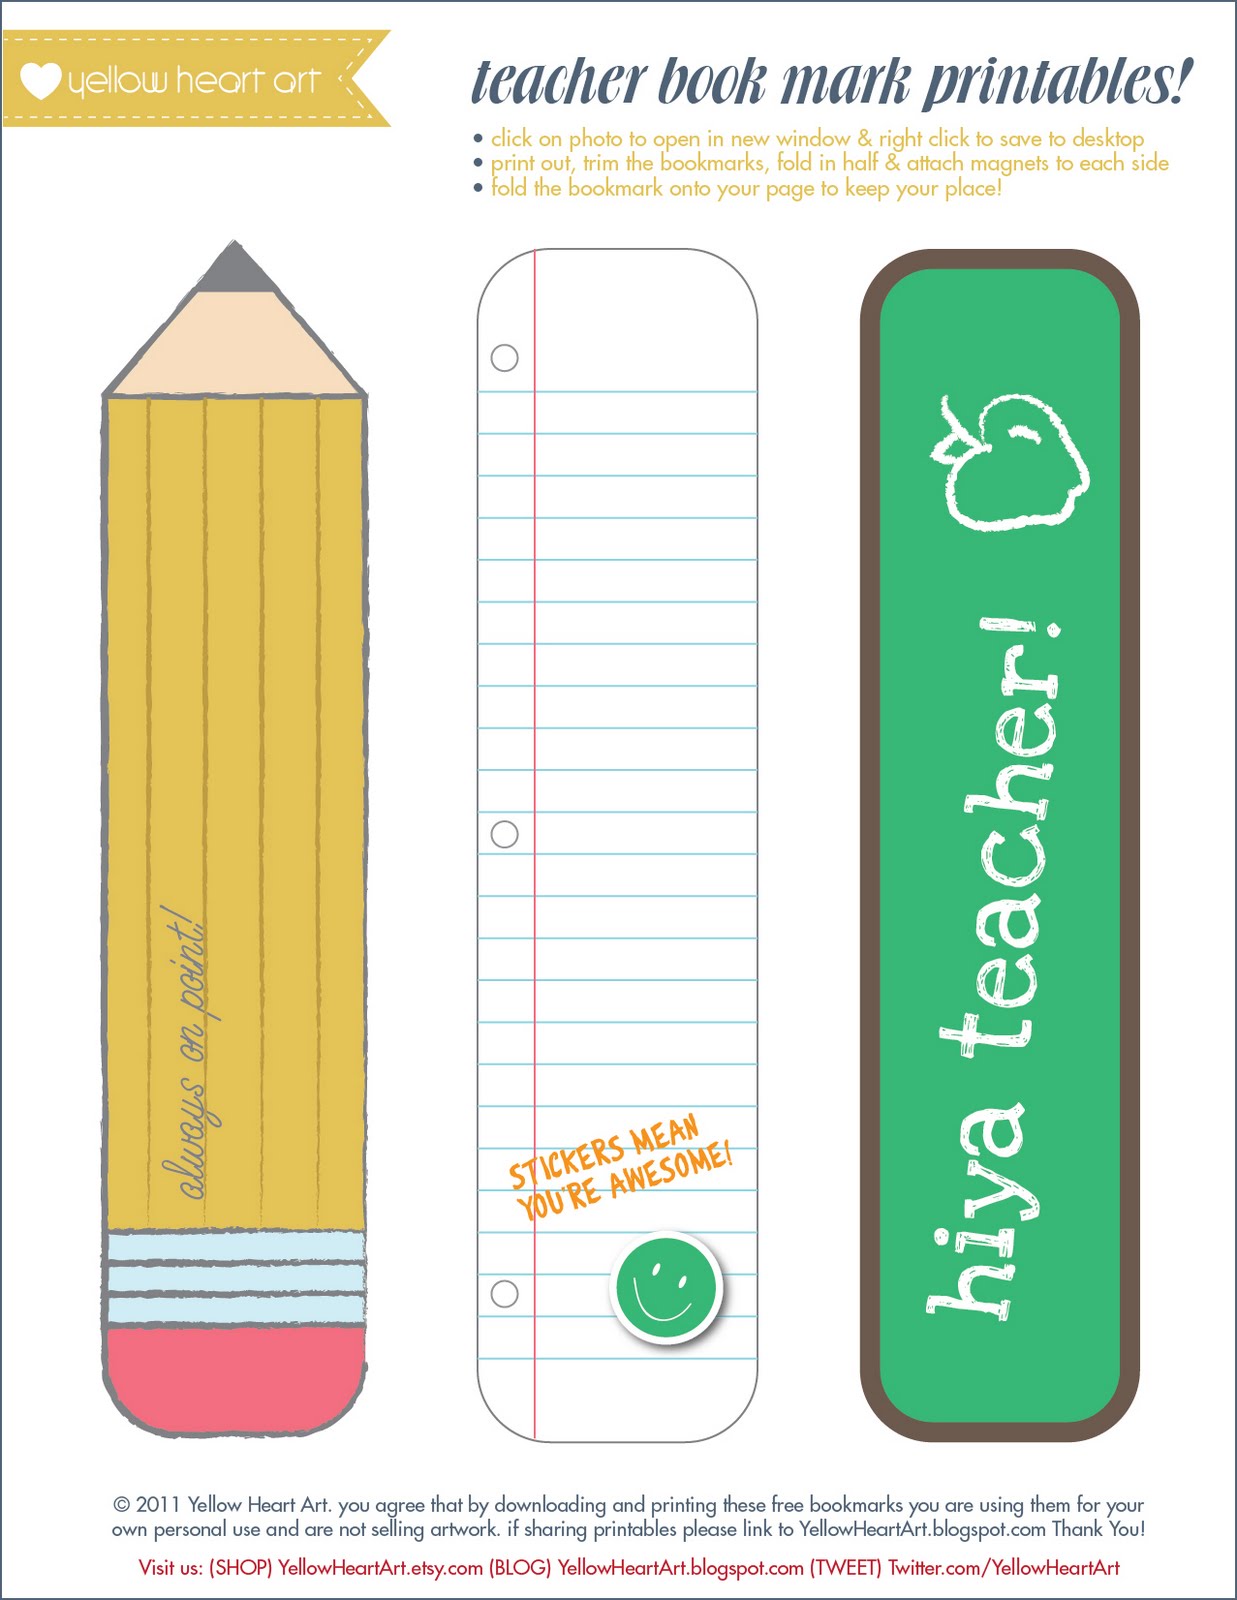 Yellow Heart Art: Tutorial Tuesday! Free Teacher Appreciation Bookmarks!